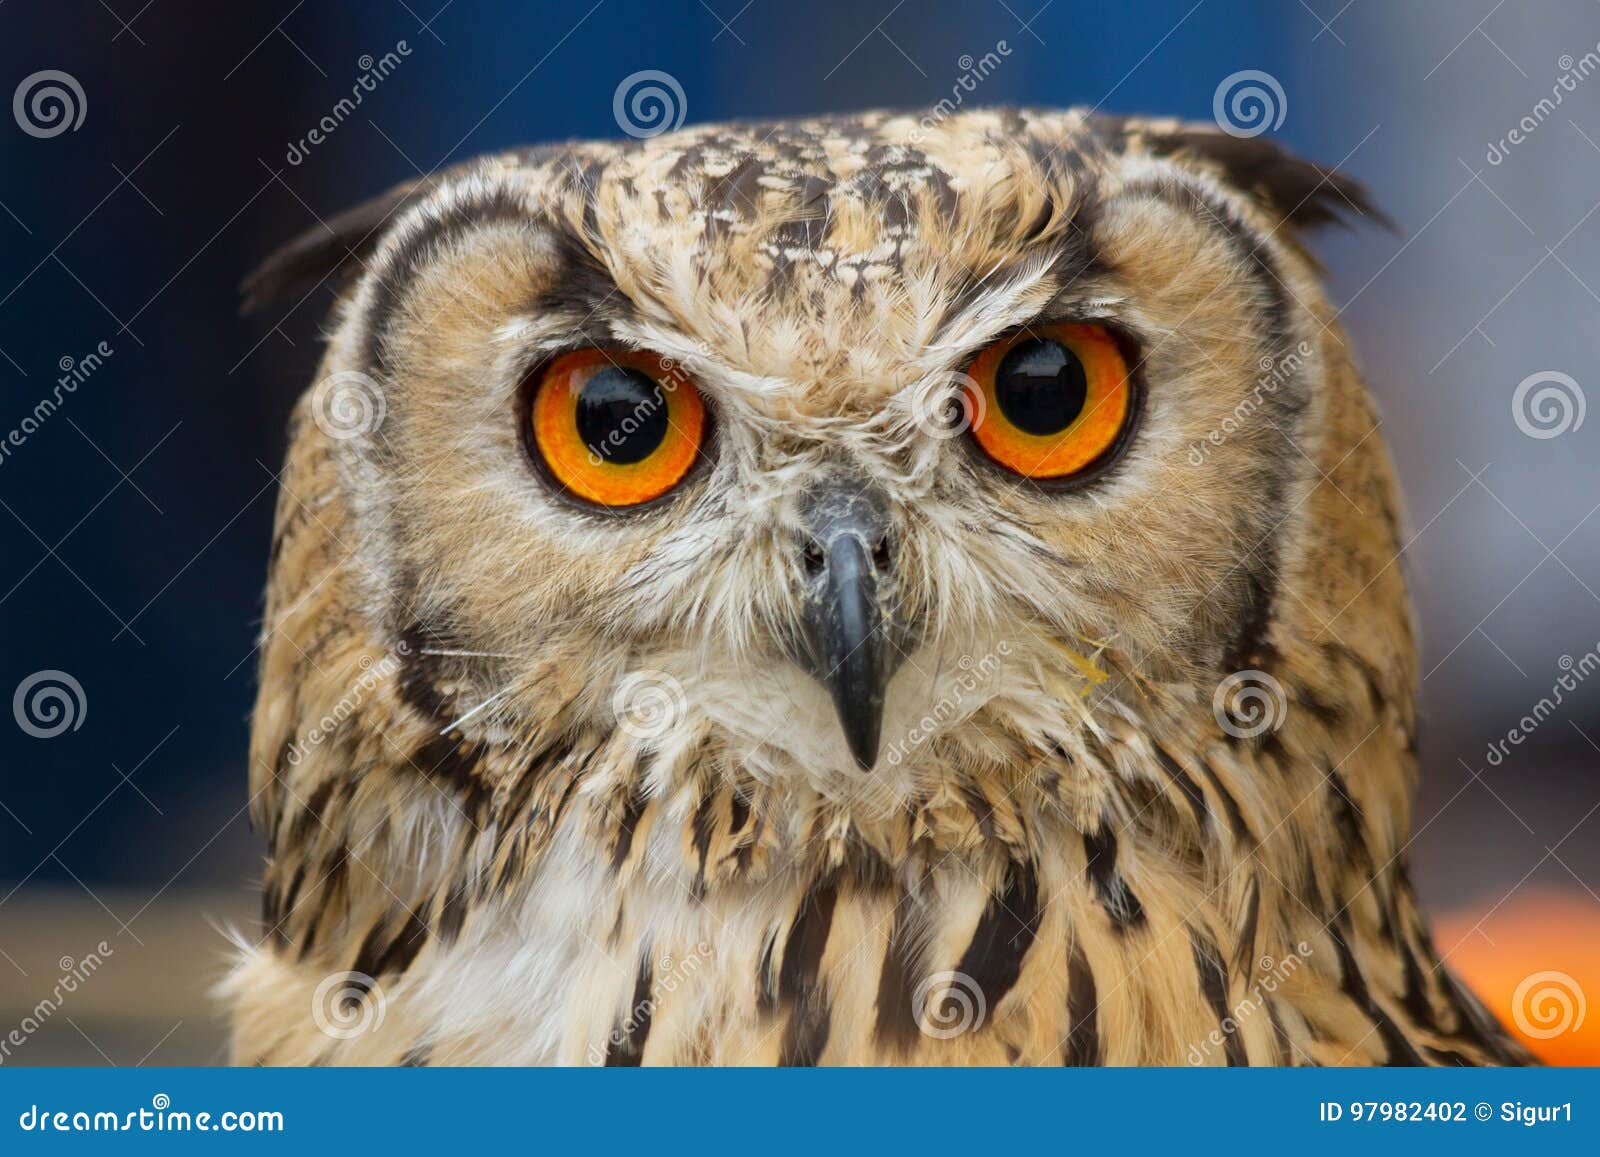 Indian Eagle Owl Head Staring at Camera Stock Photo - Image of peak ...